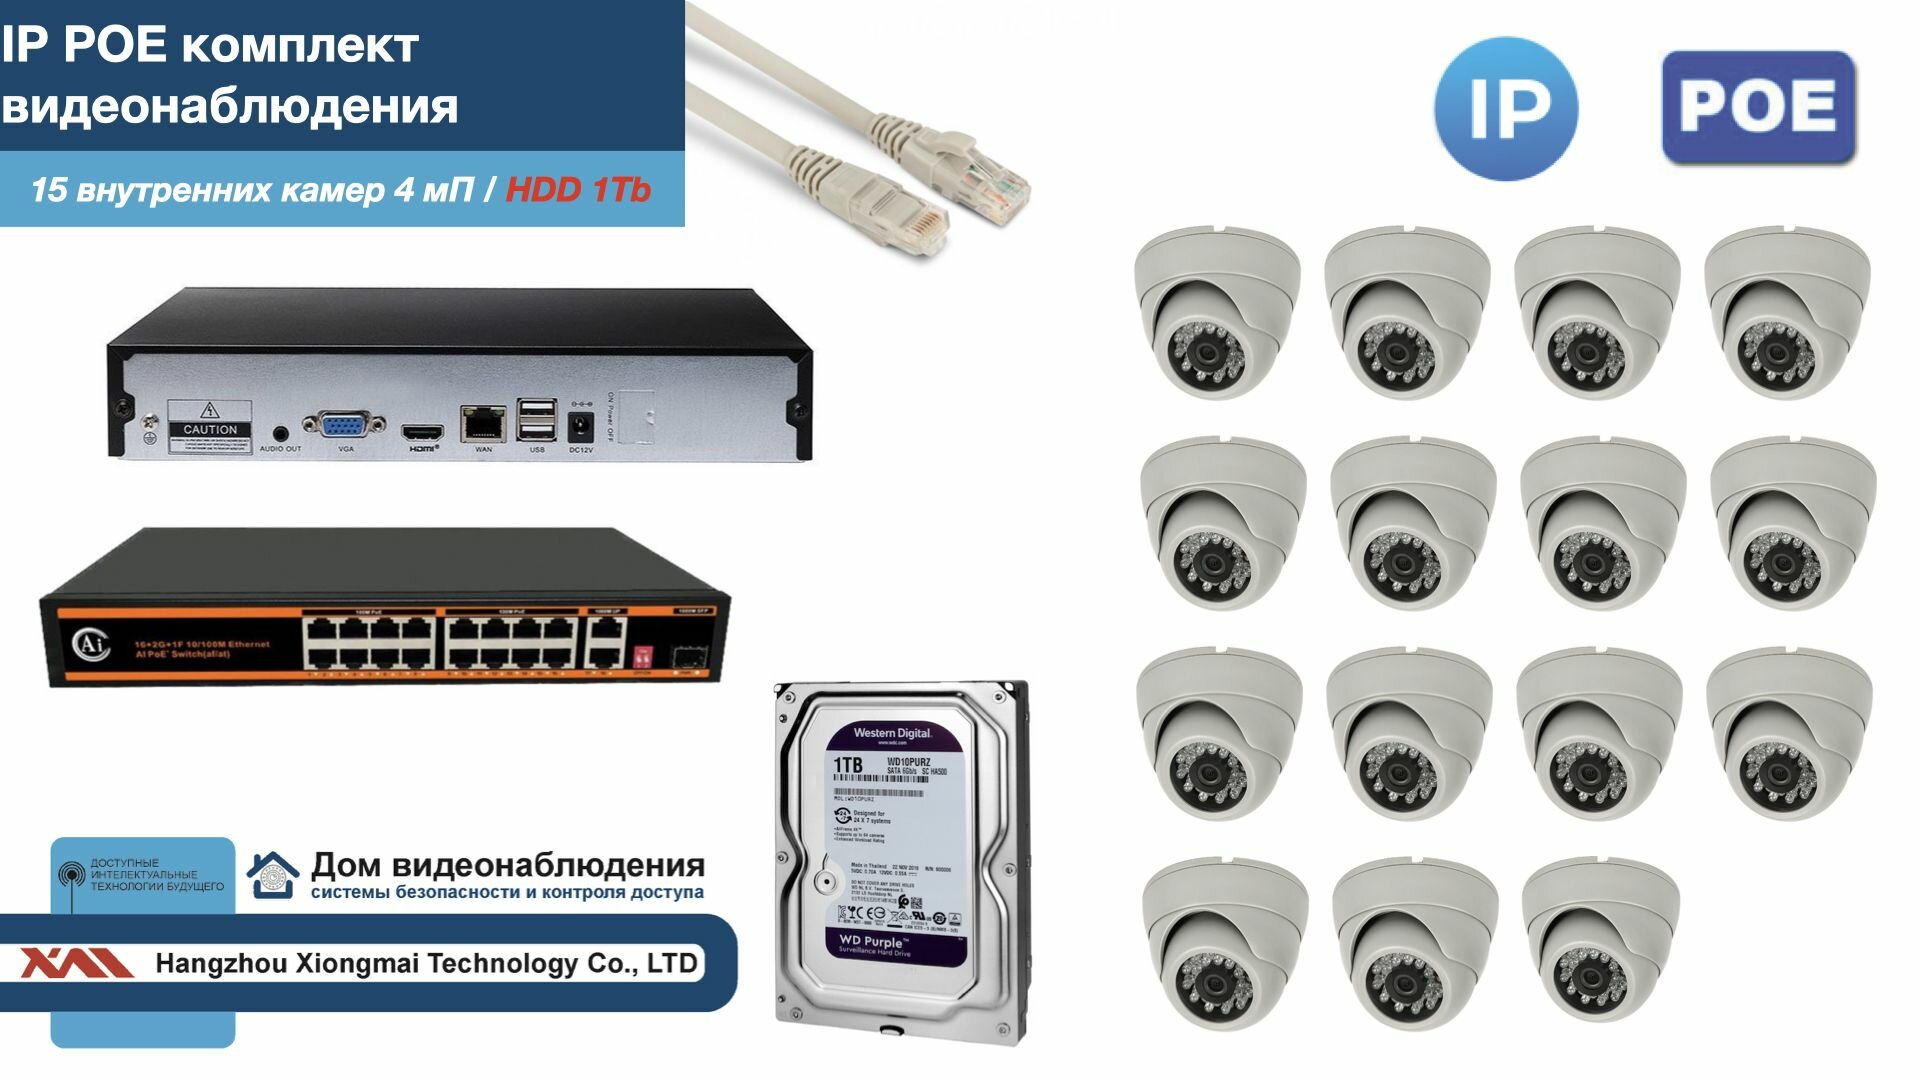 Полный IP POE комплект видеонаблюдения на 15 камер (KIT15IPPOE300W4MP-HDD1Tb)